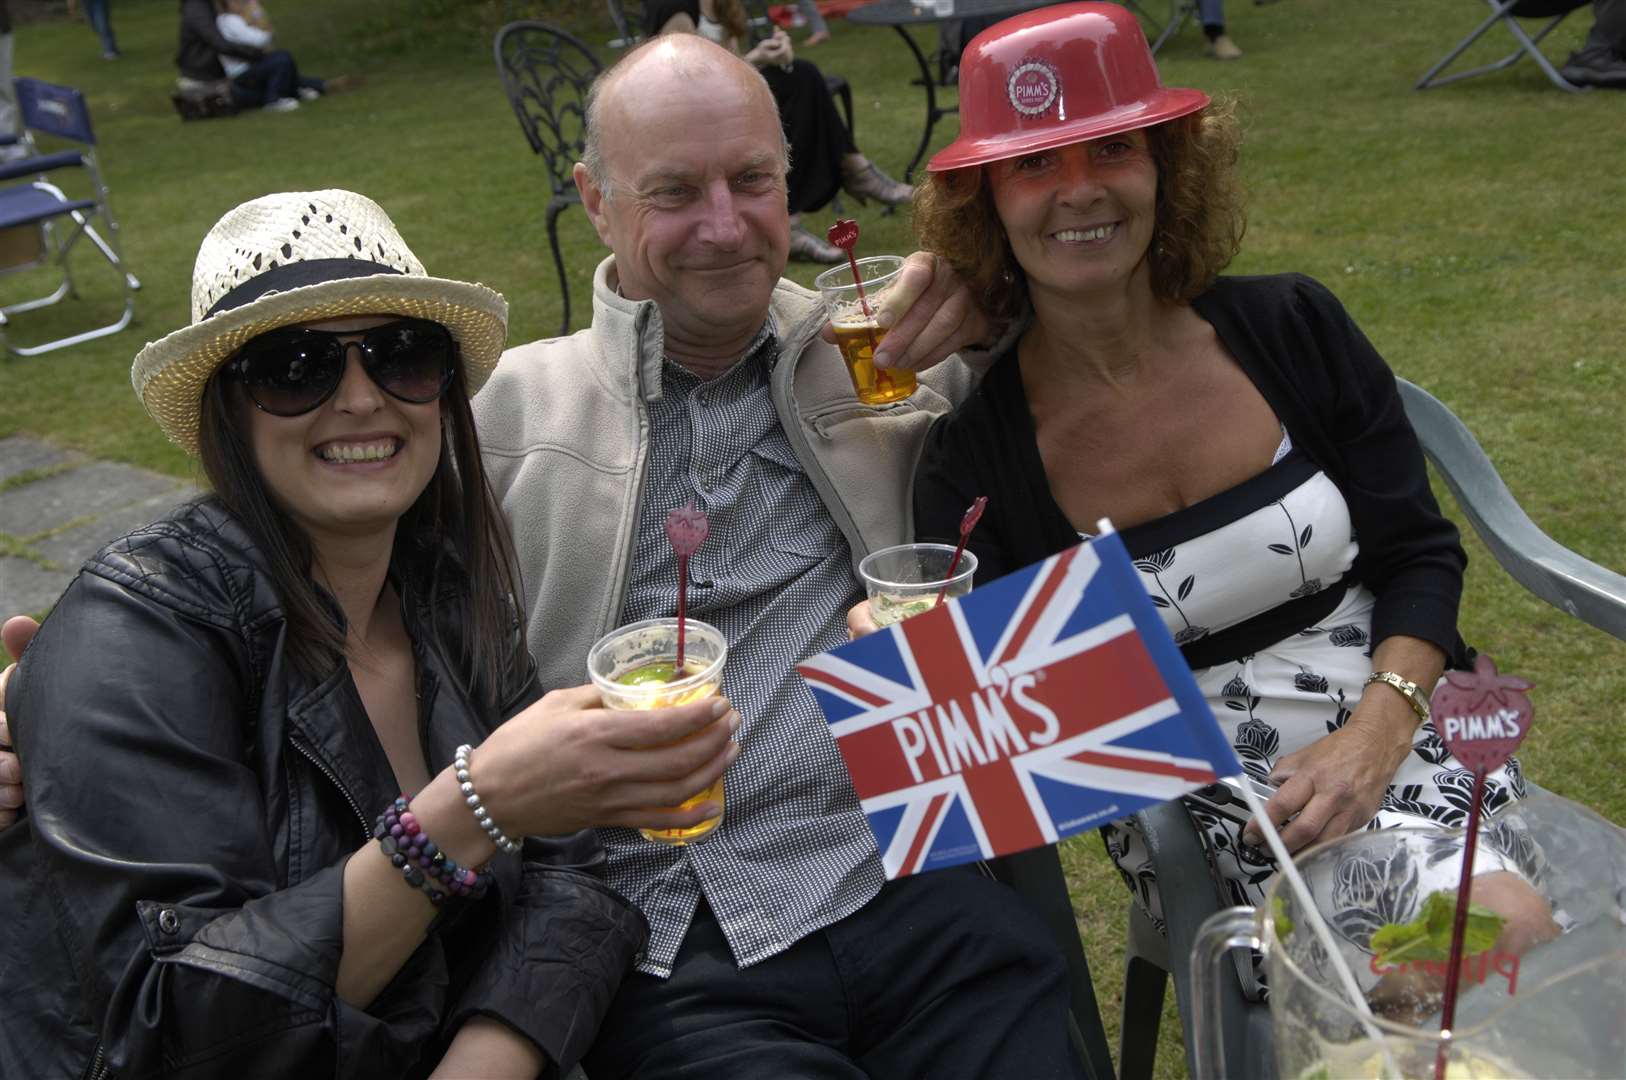 Jodi Bonner, Dave Mullins and Wendy Bonner enjoy a Pimms during a royal wedding garden party in April 2011